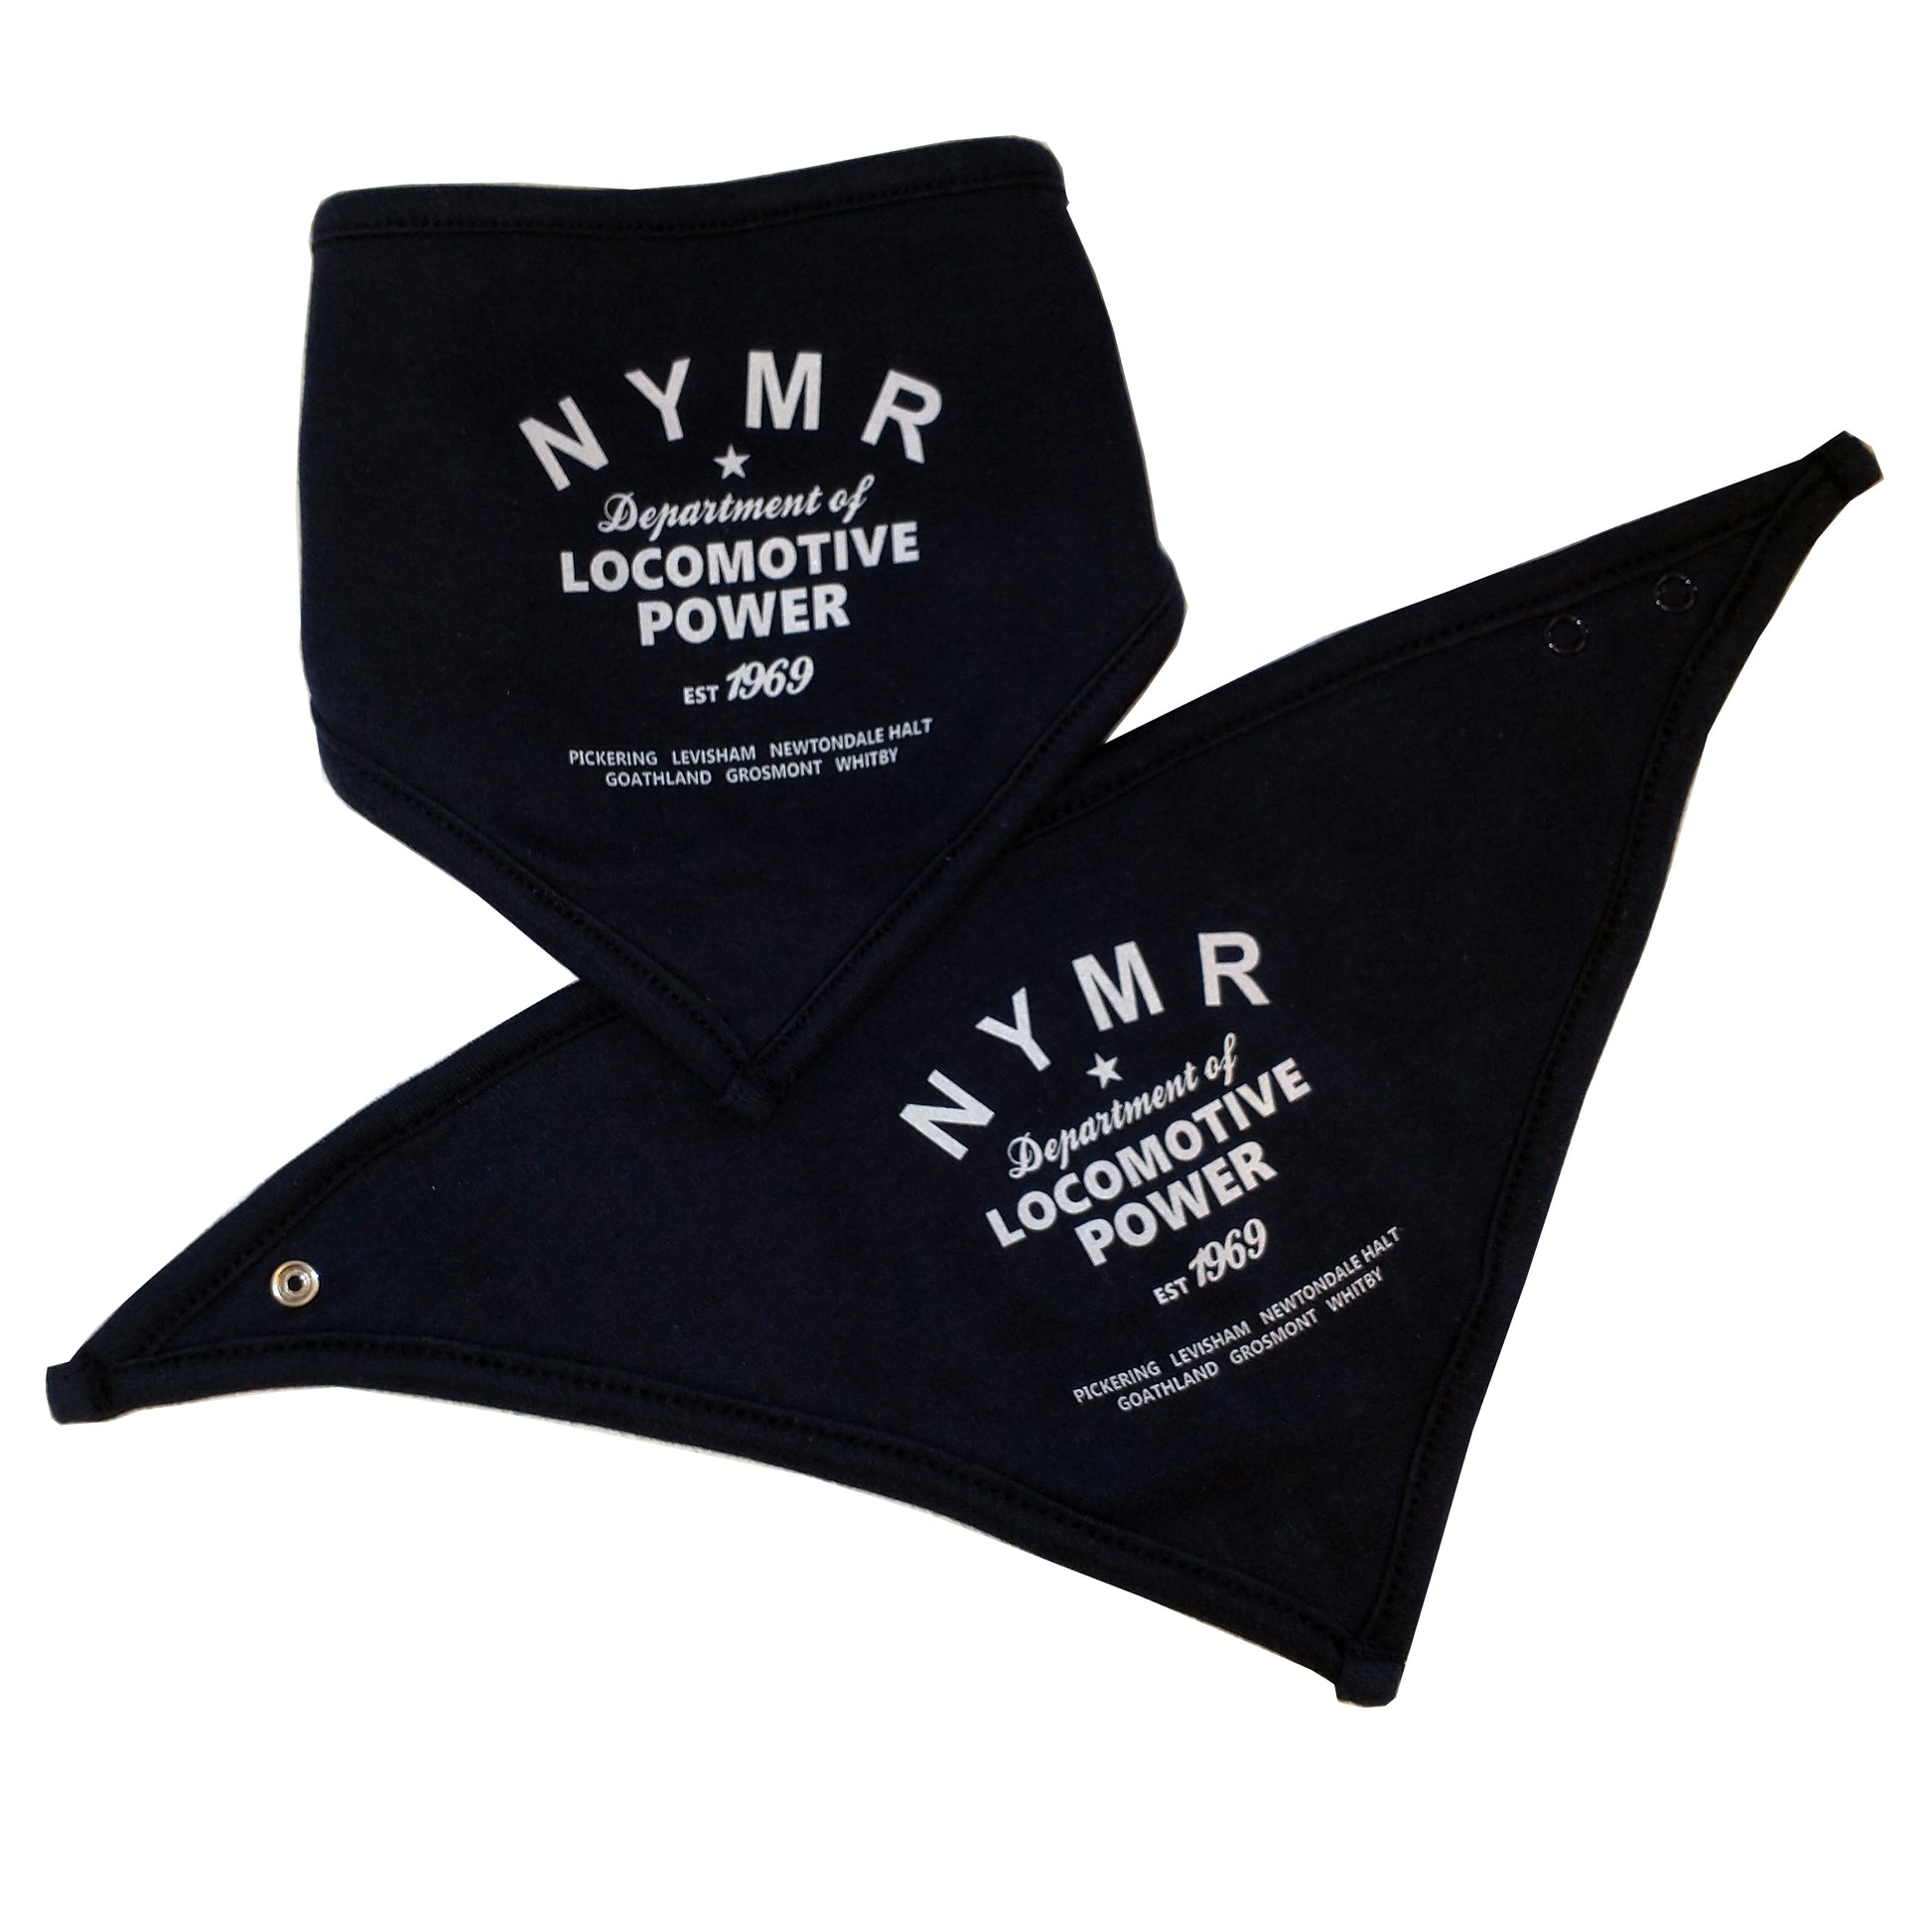 Two navy blue bandana bibs with N Y M R Locomotive Power logo and press stud fastening.